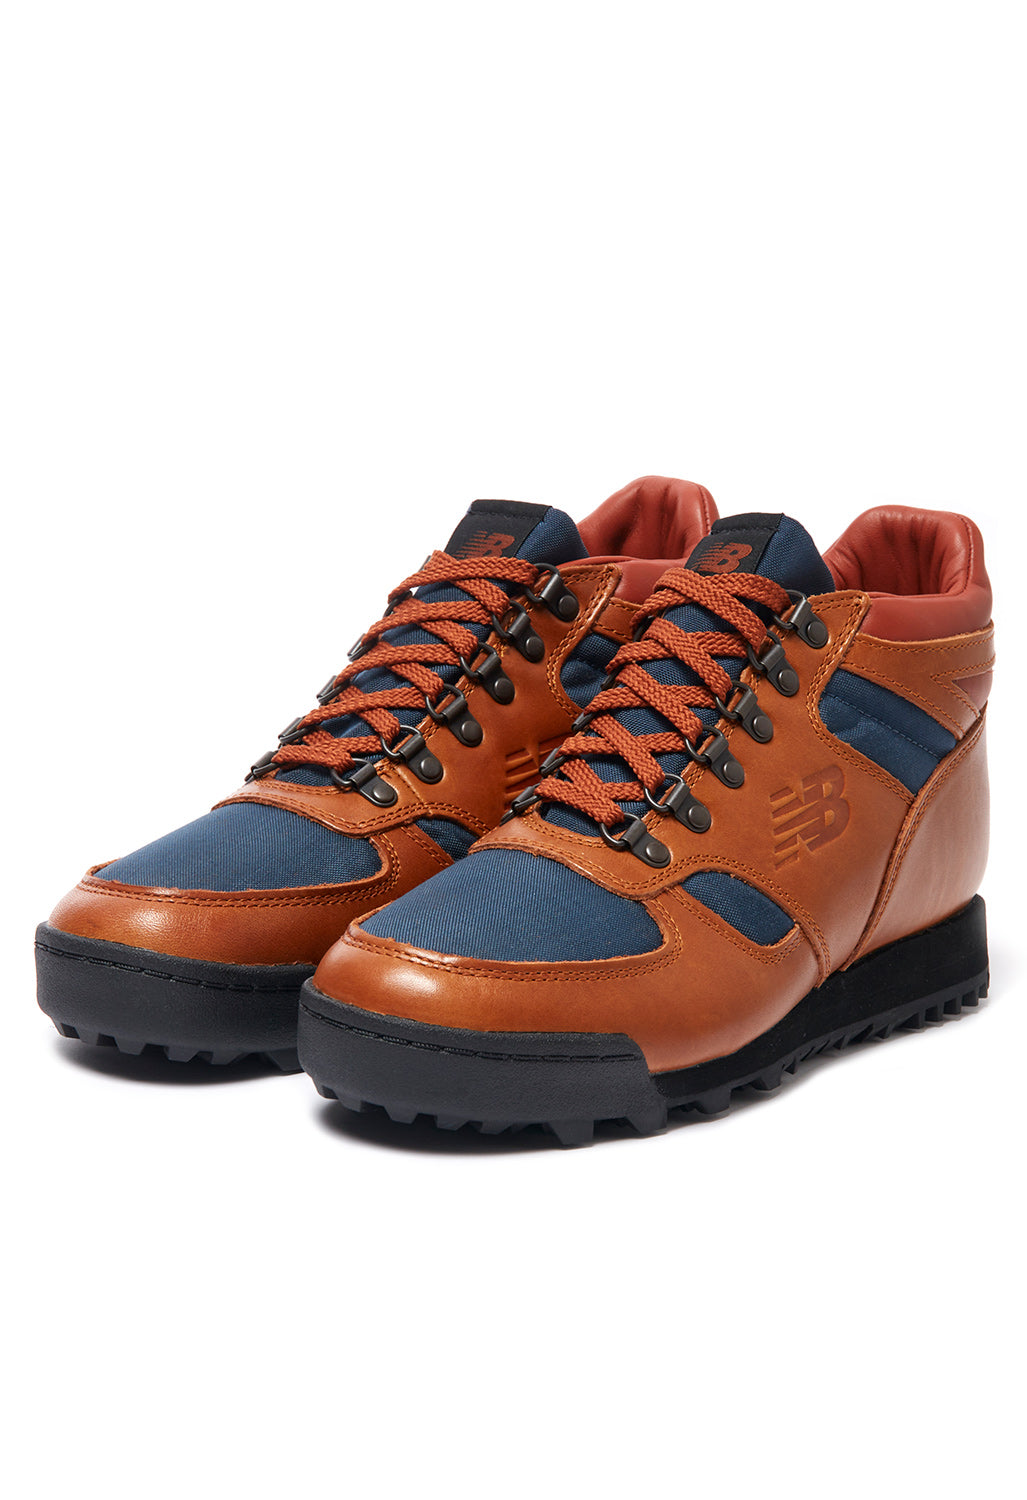 New Balance Rainier Boots - Brown